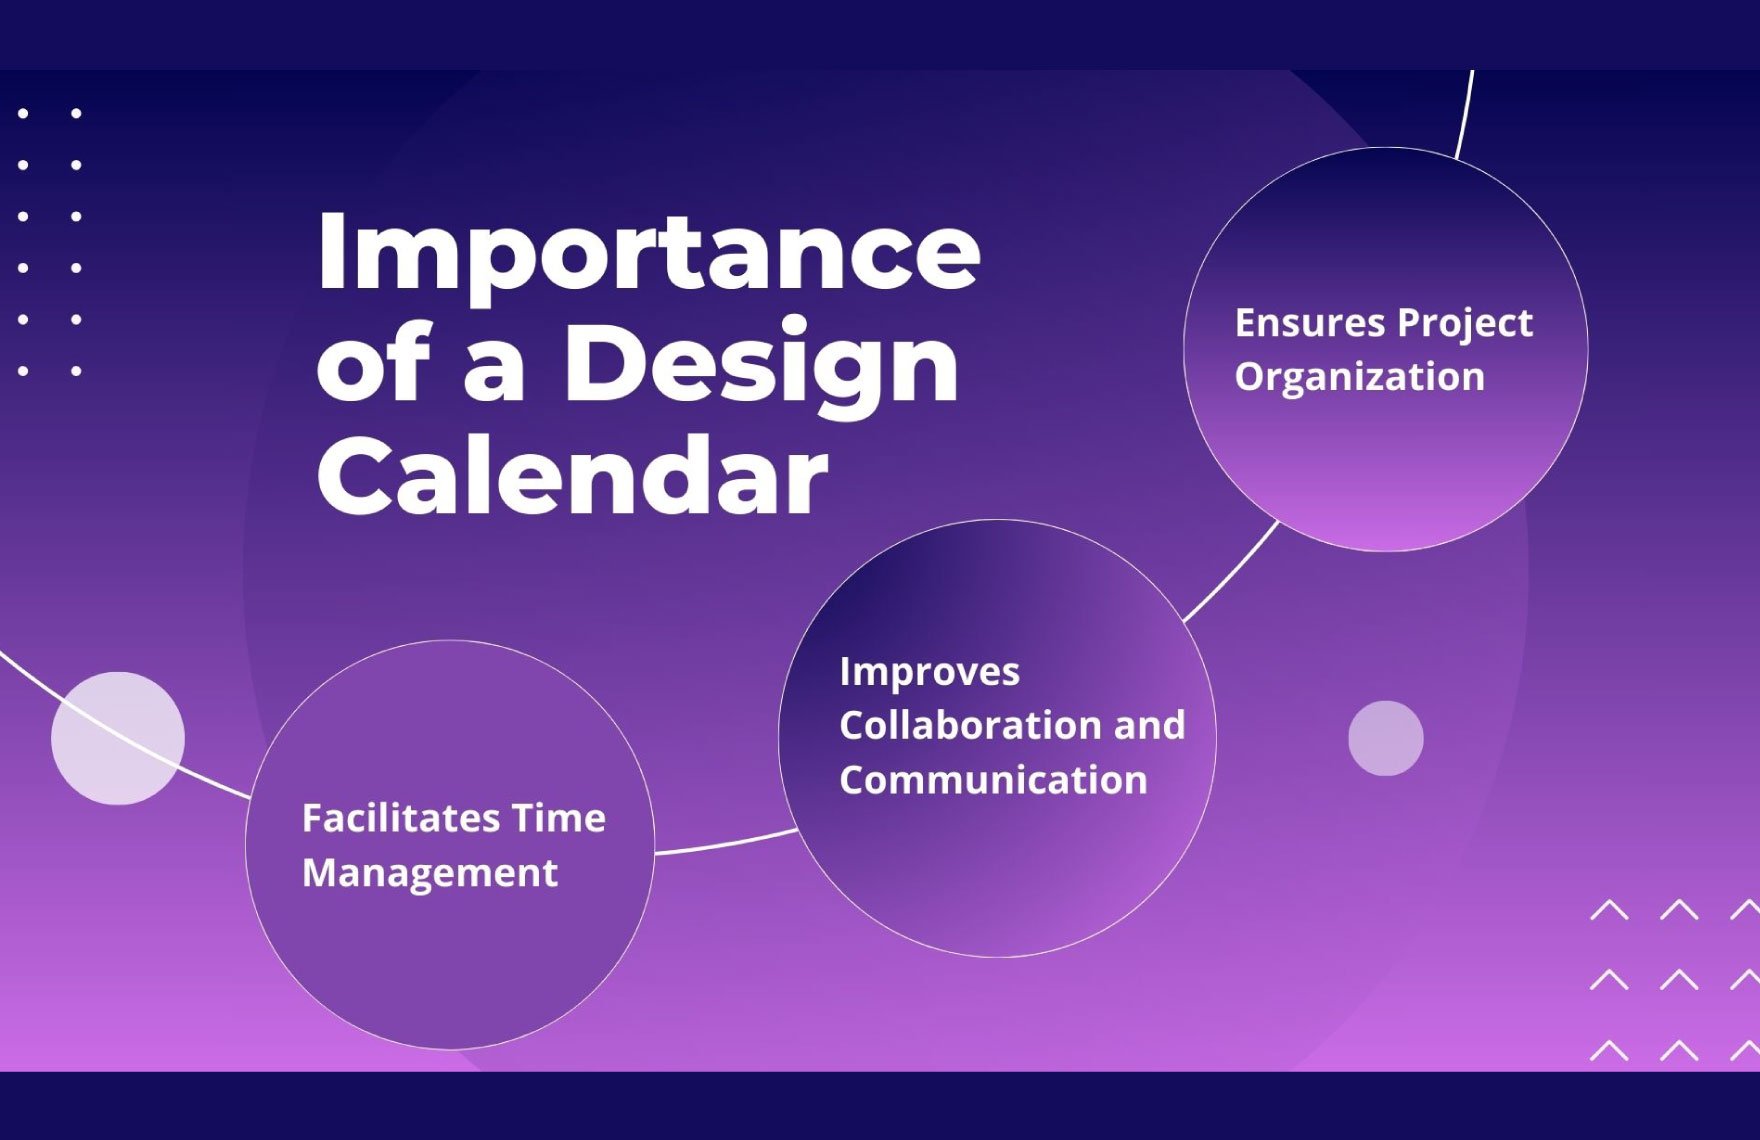 Design Calendar Template